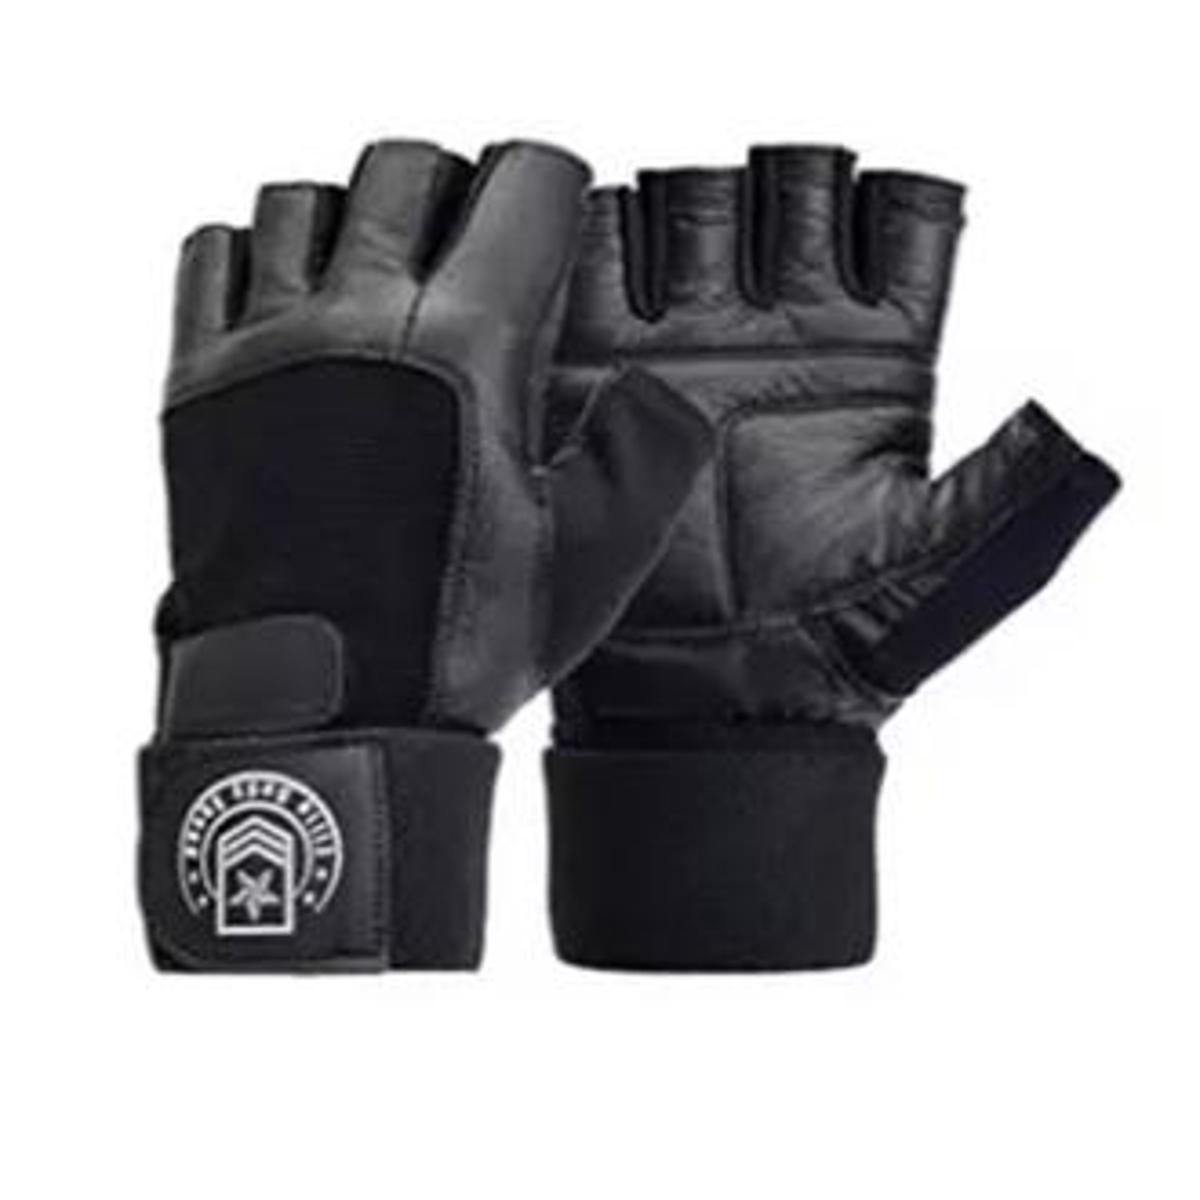 Buy Gym Gloves for Men  Weightlifting Fitness Gloves - HUSTLERS ONLY PK